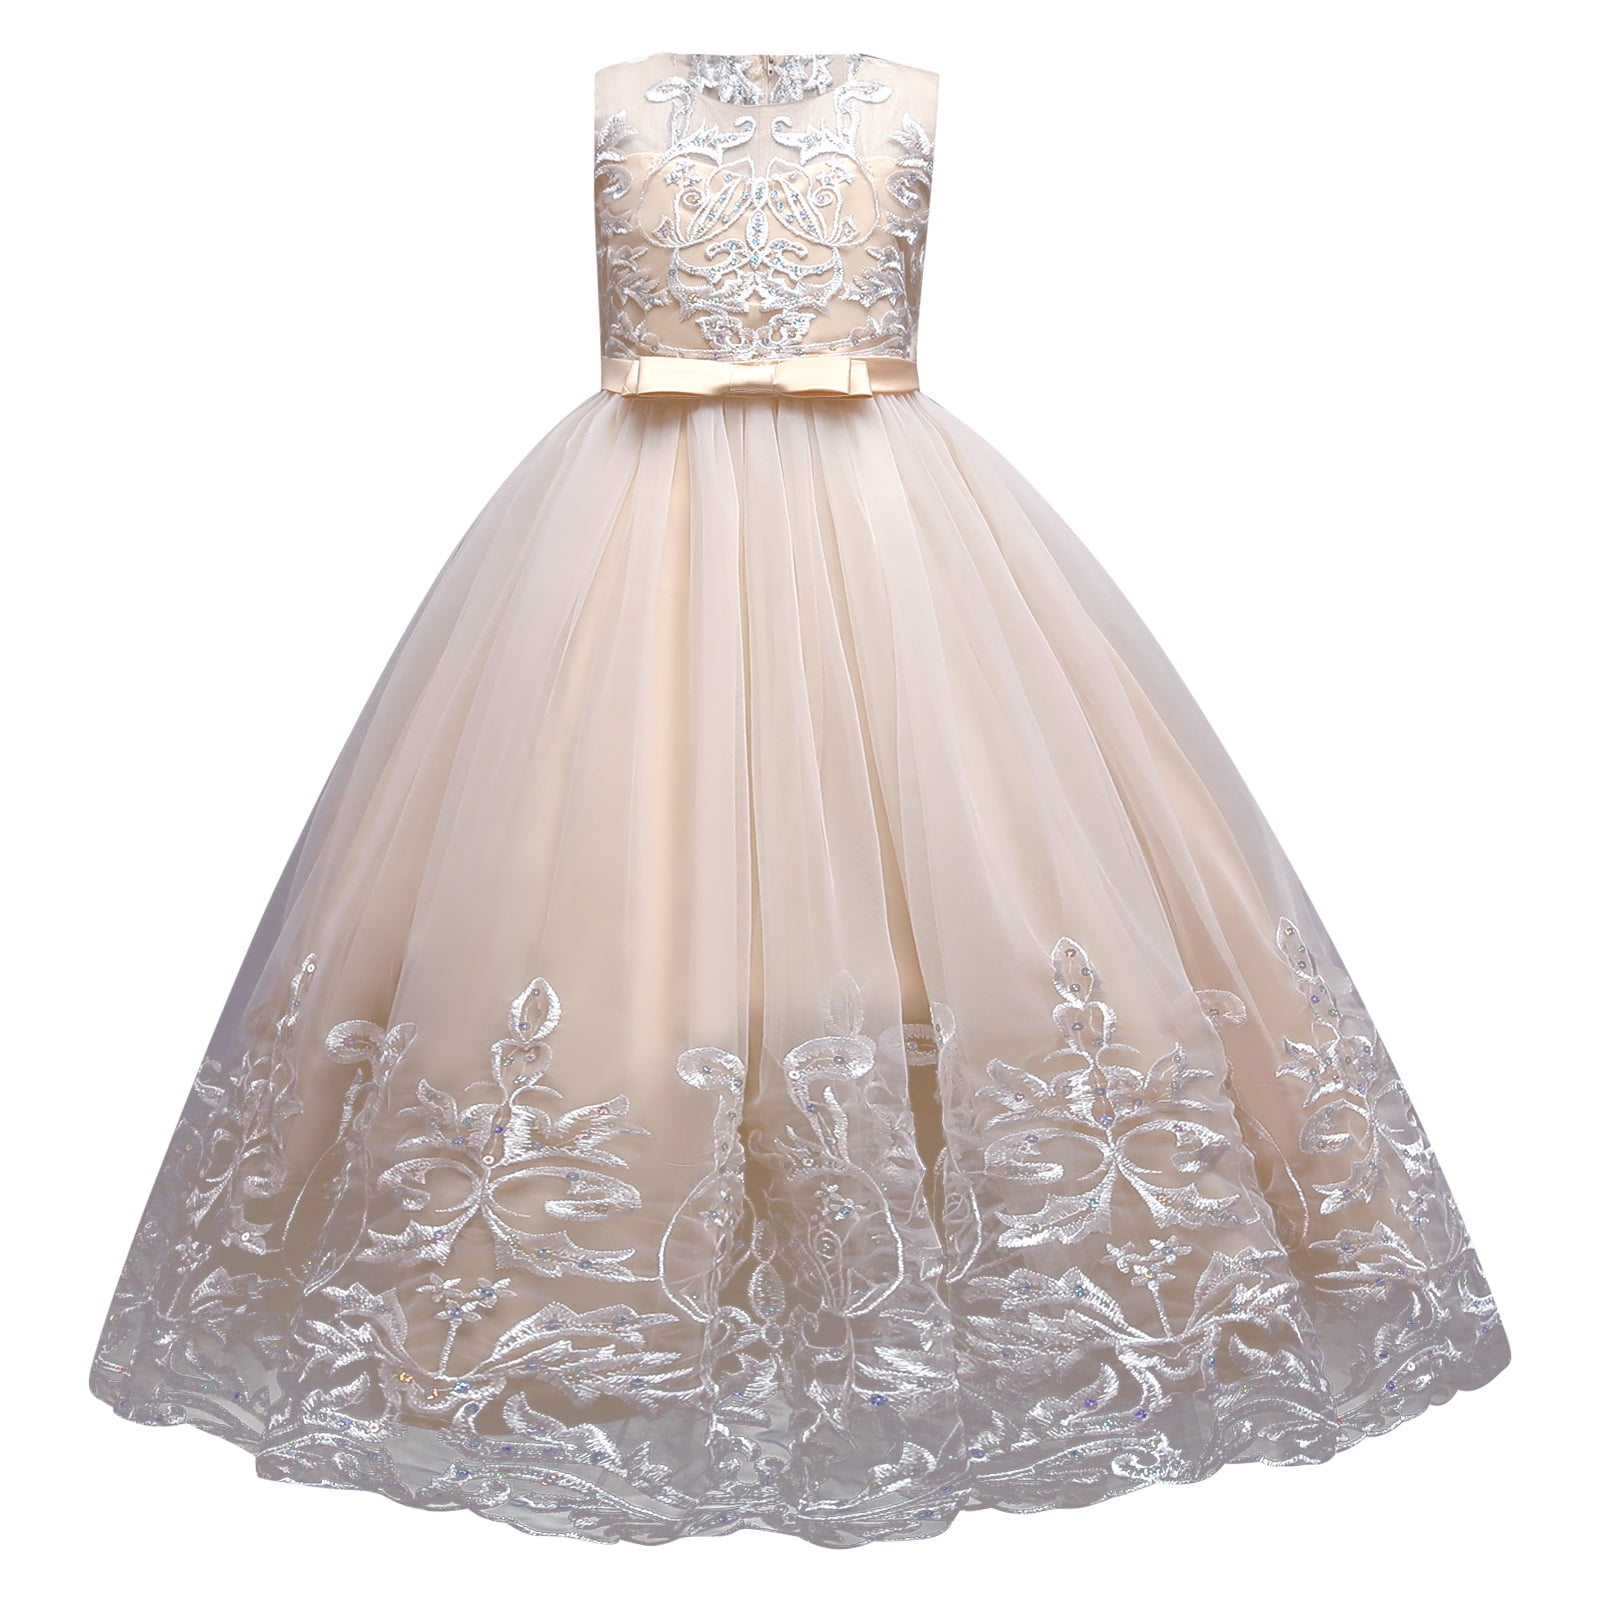 IBTOM CASTLE Flower Girl Lace Dress for Kids Wedding Bridesmaid Pageant ...